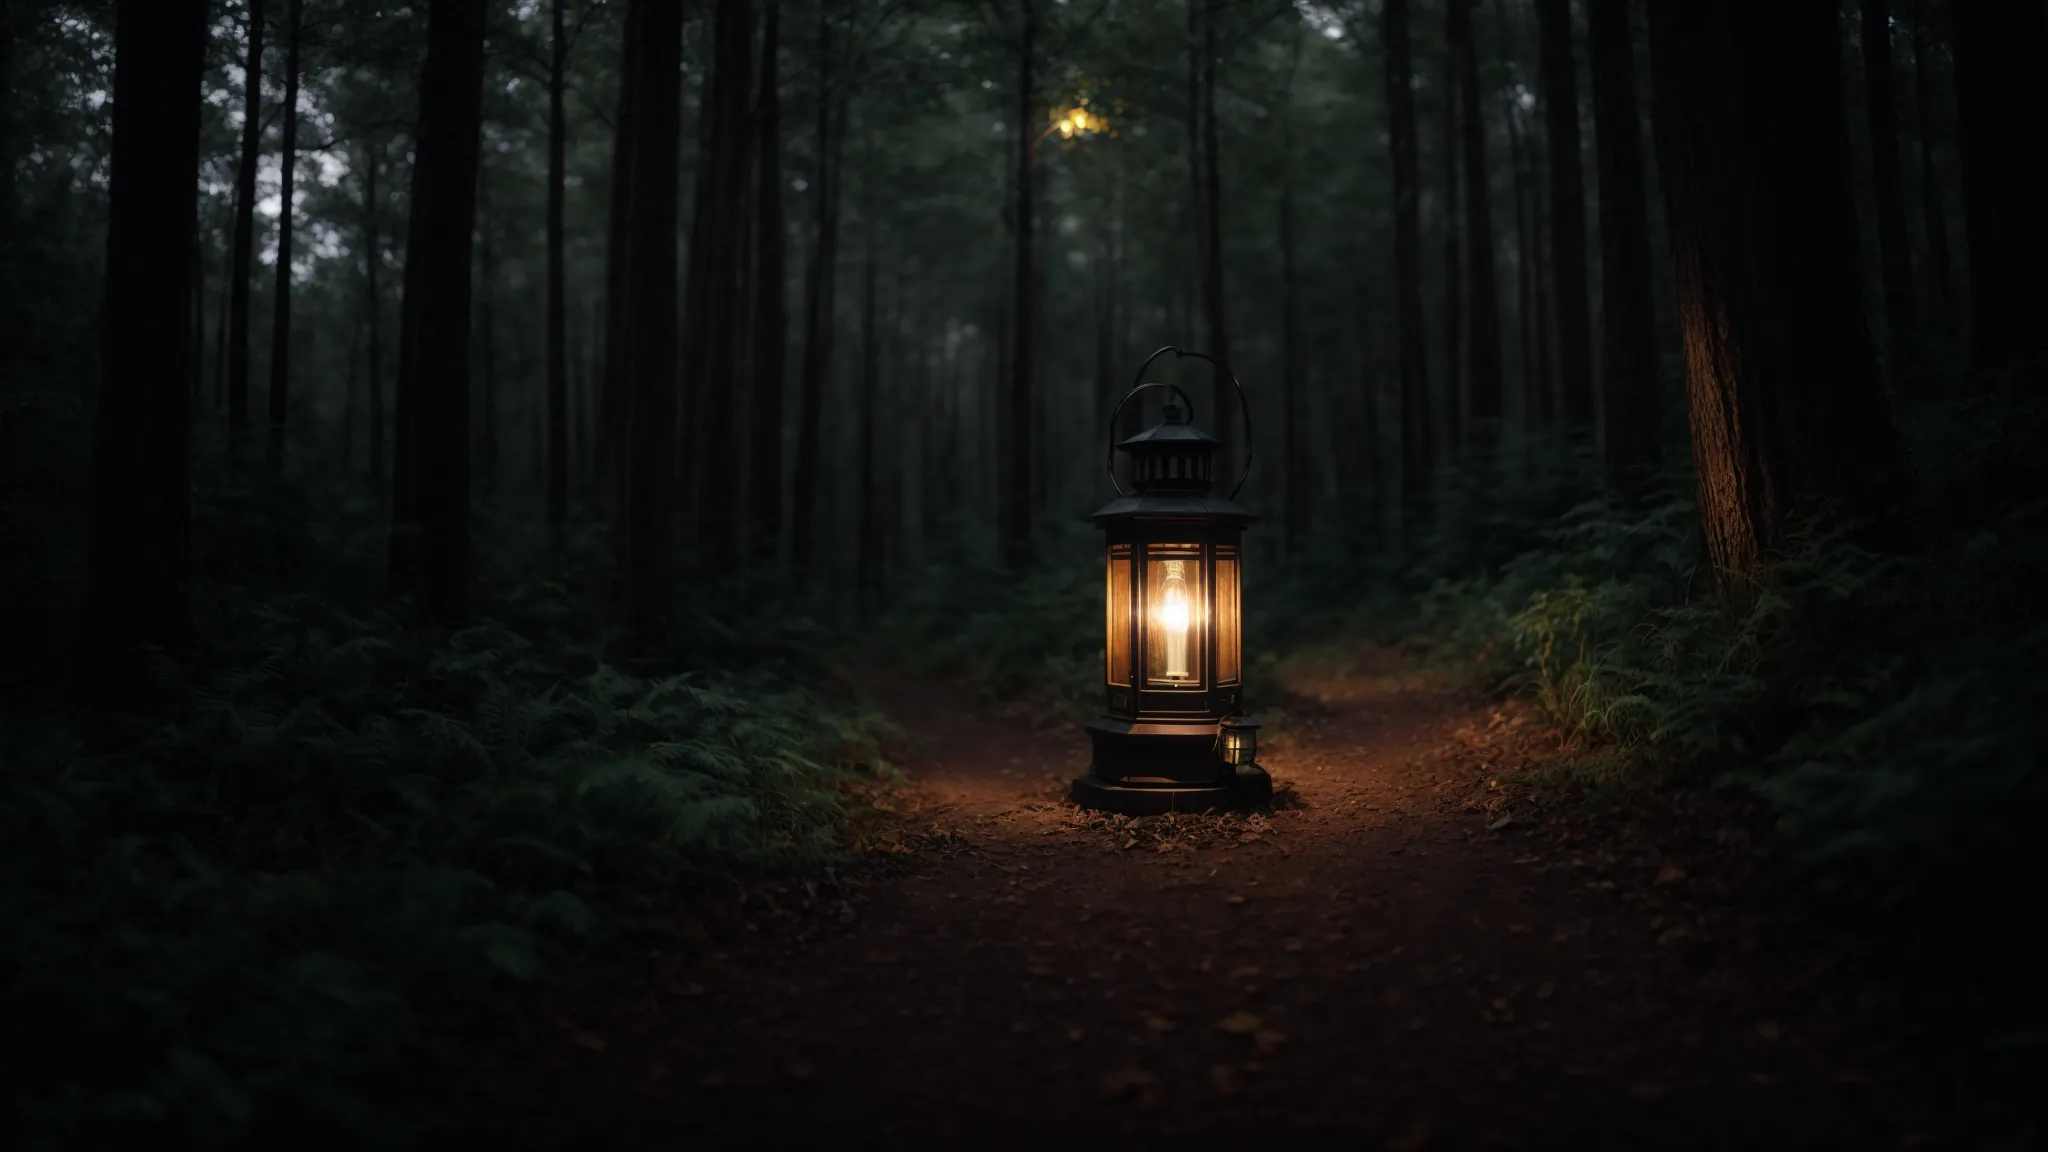 a single lantern illuminating a dark, winding path through a dense digital matrix forest. 